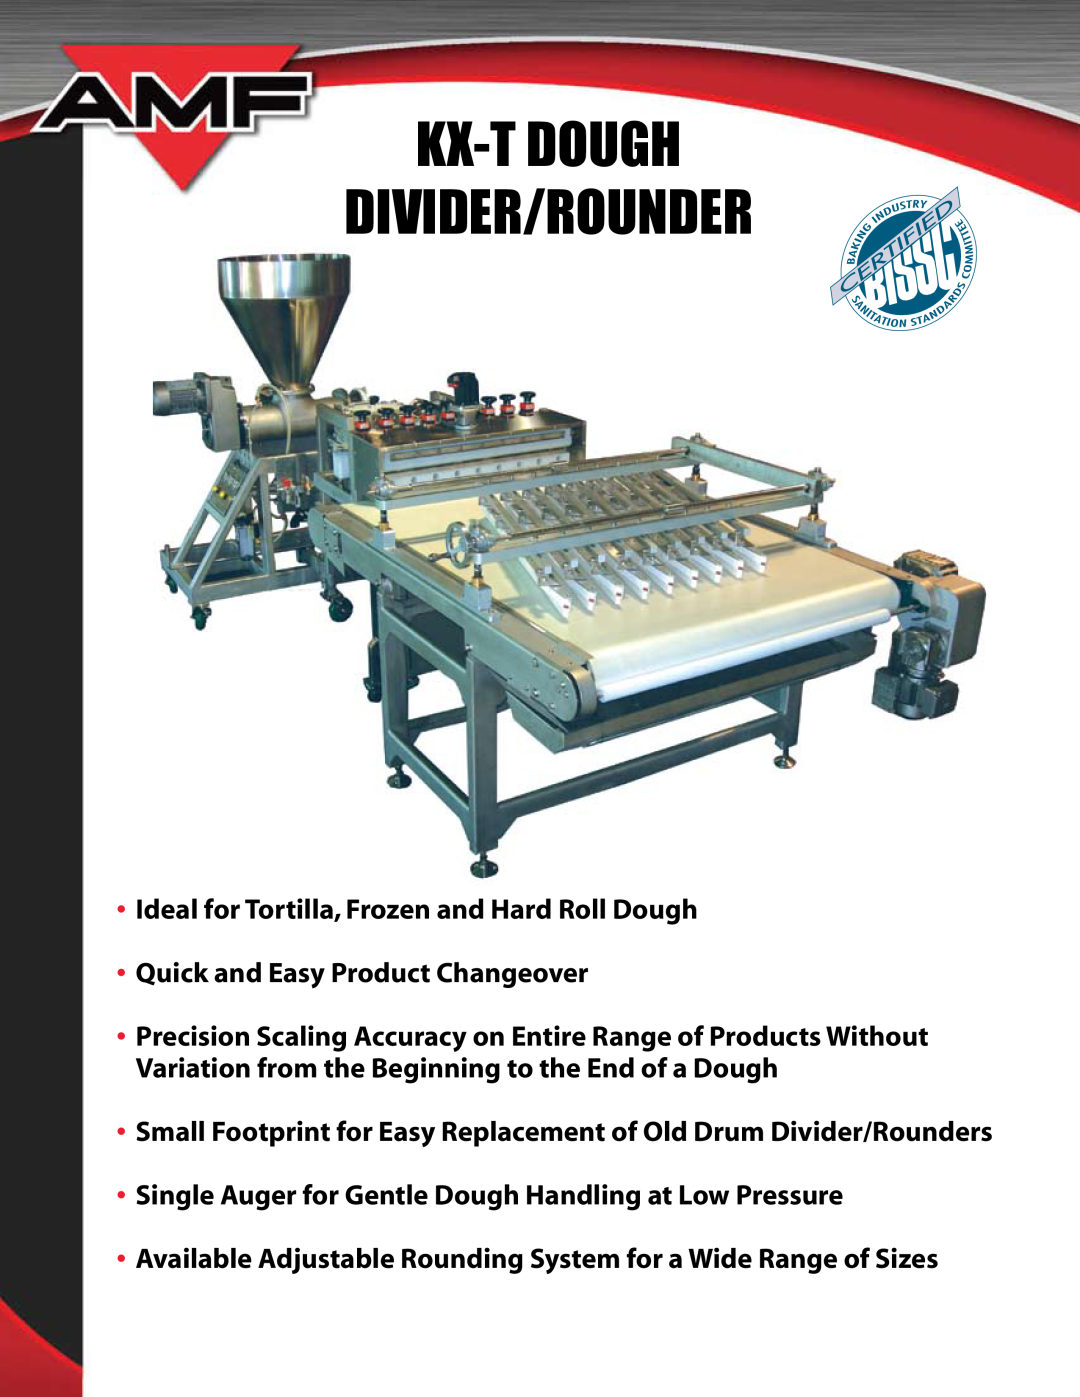 AMF KX-T manual Kx-Tdough Divider/Rounder 